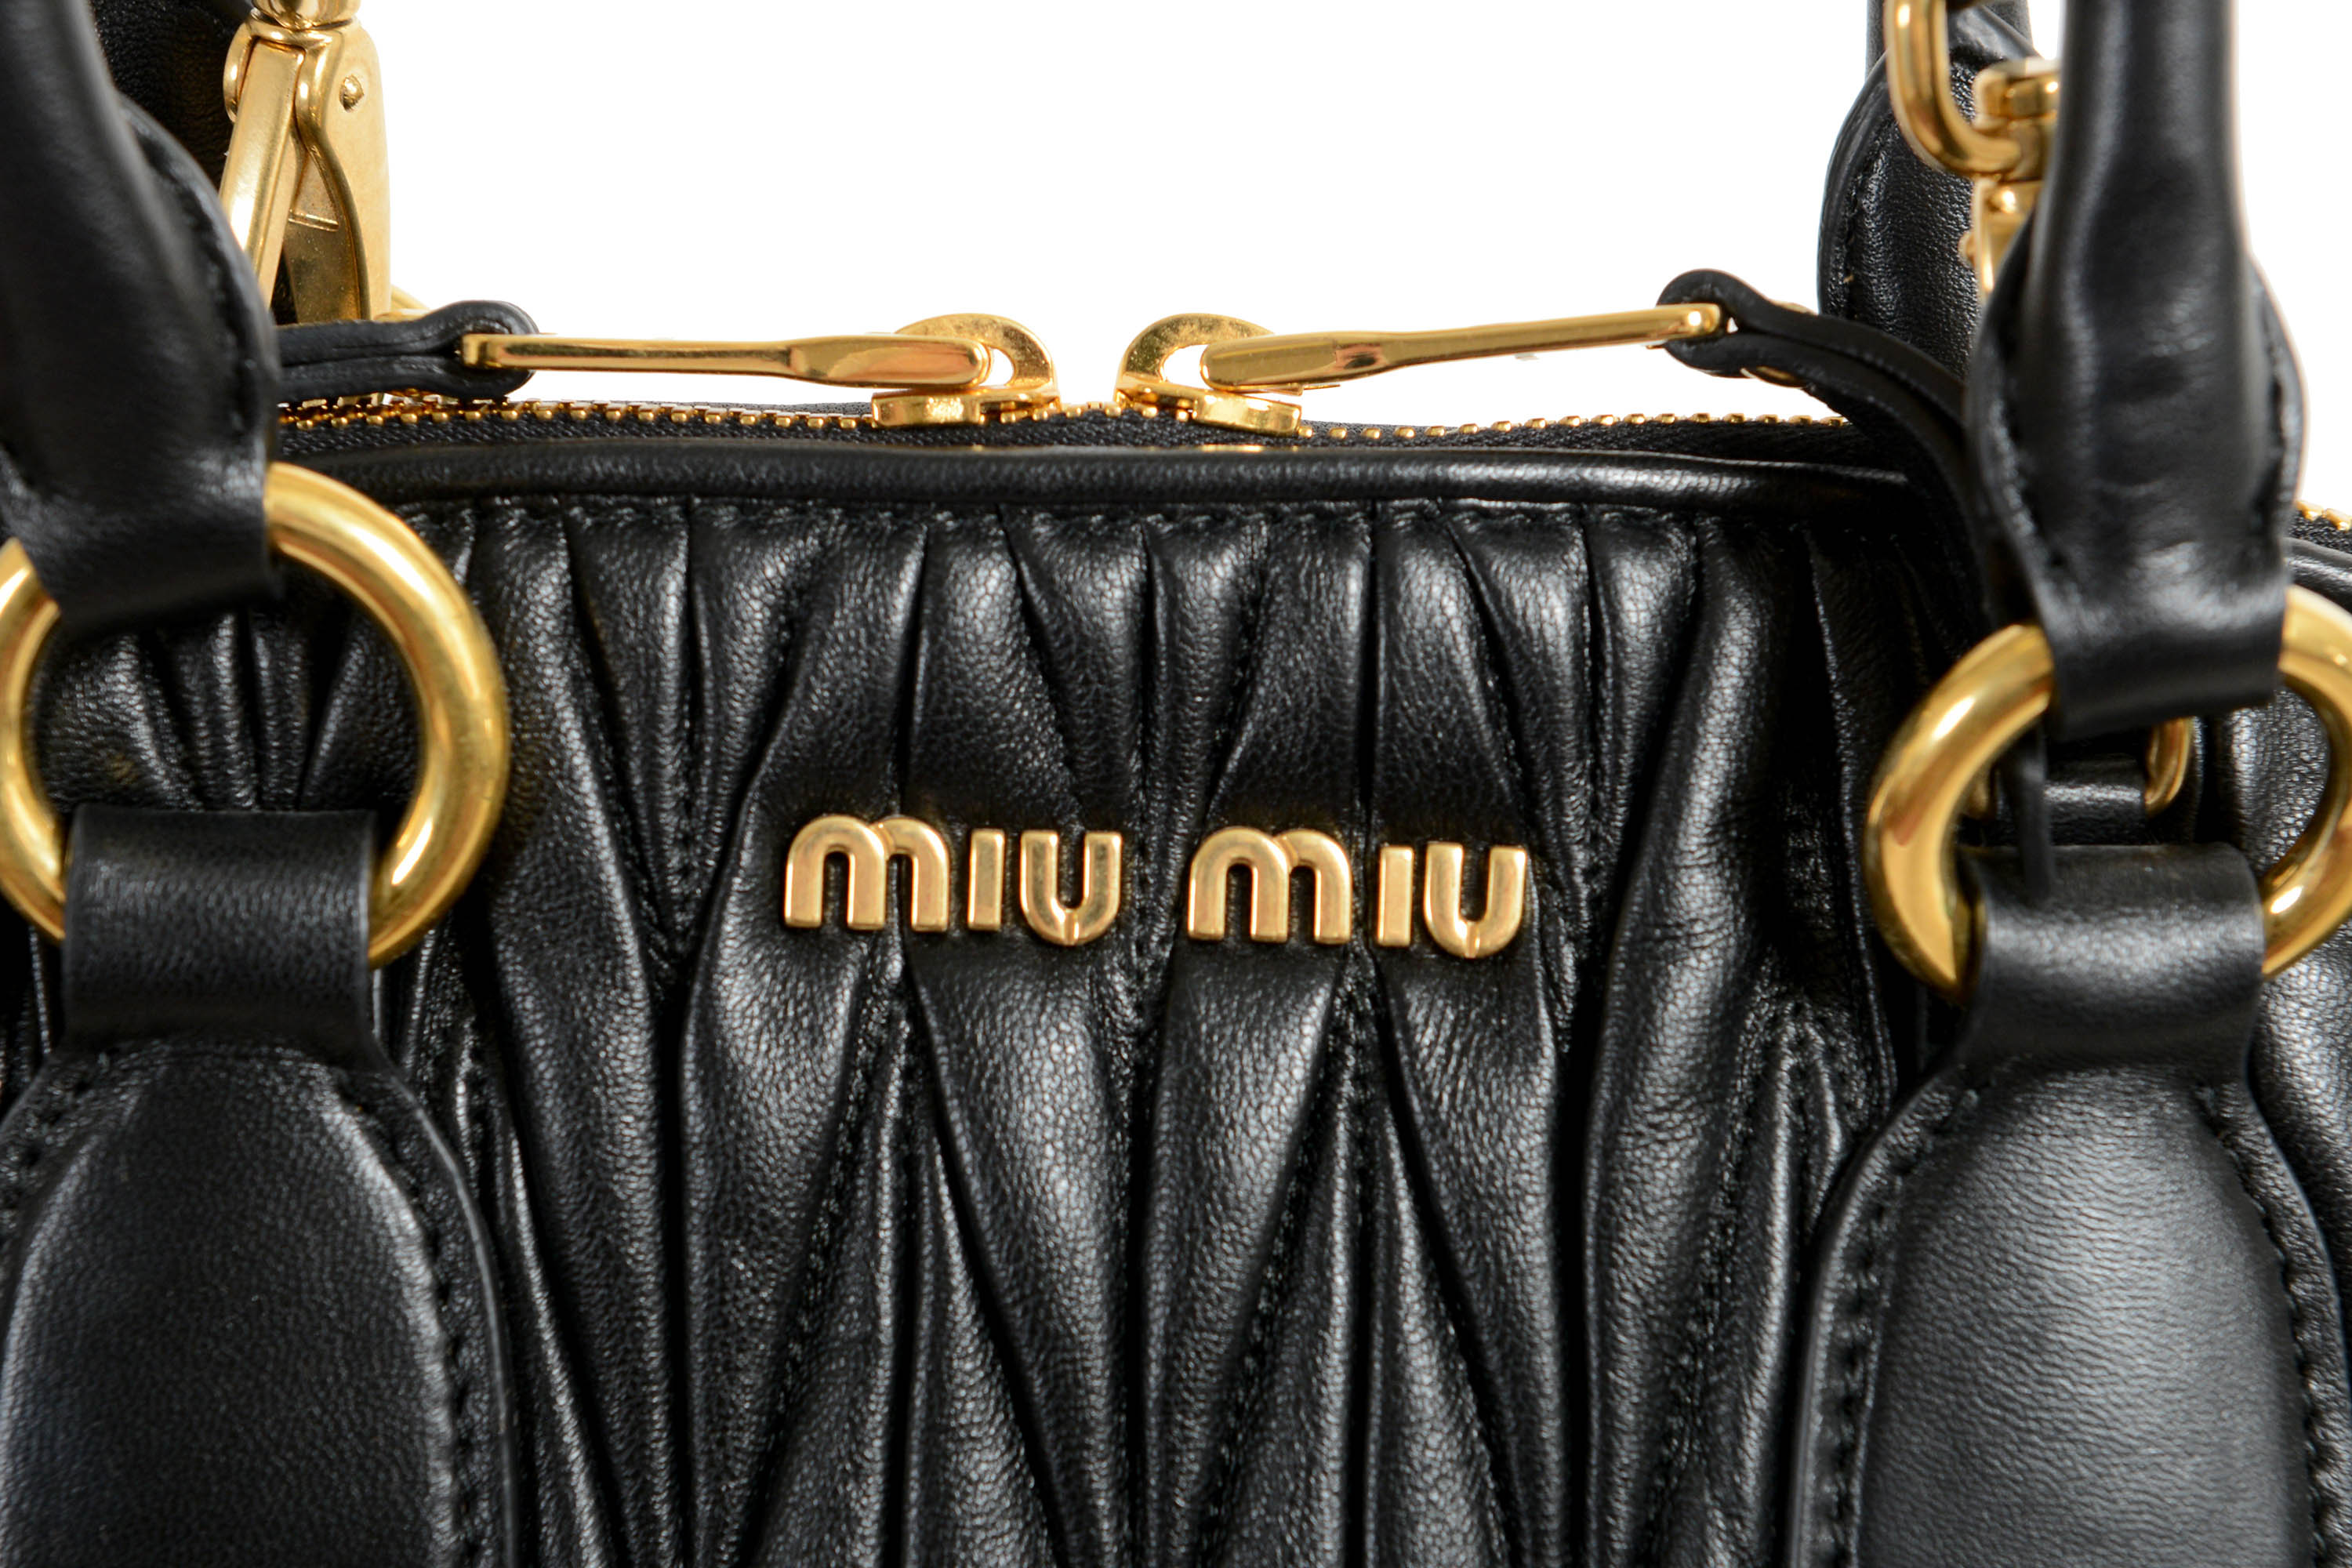 Leather Shoulder Bag in Black - Miu Miu